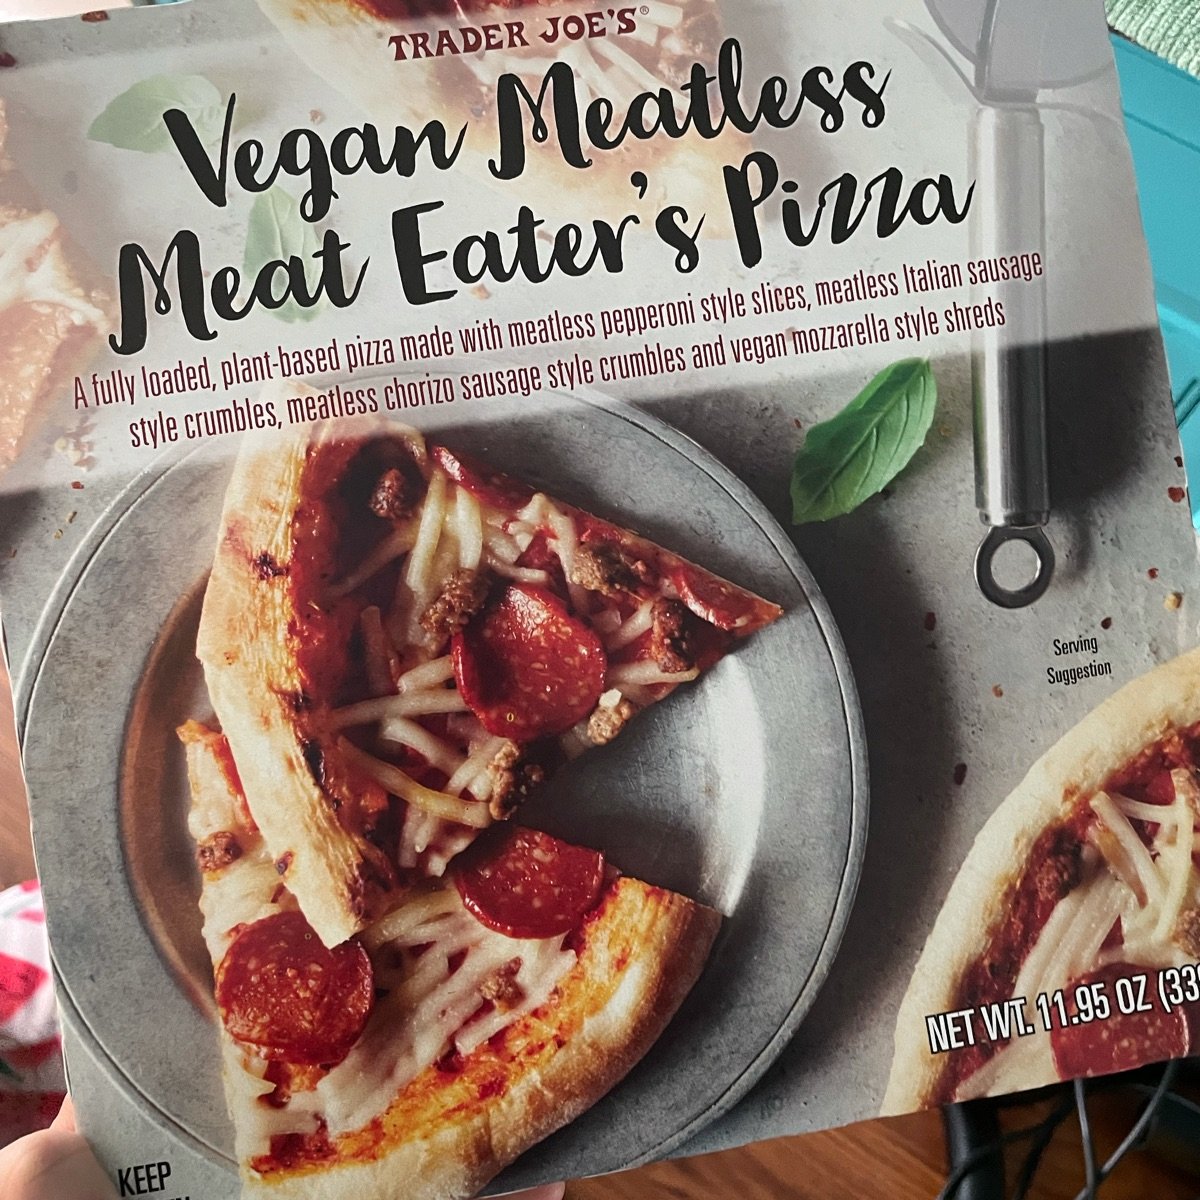 Trader Joe's Vegan meatless meat eaters pizza Reviews